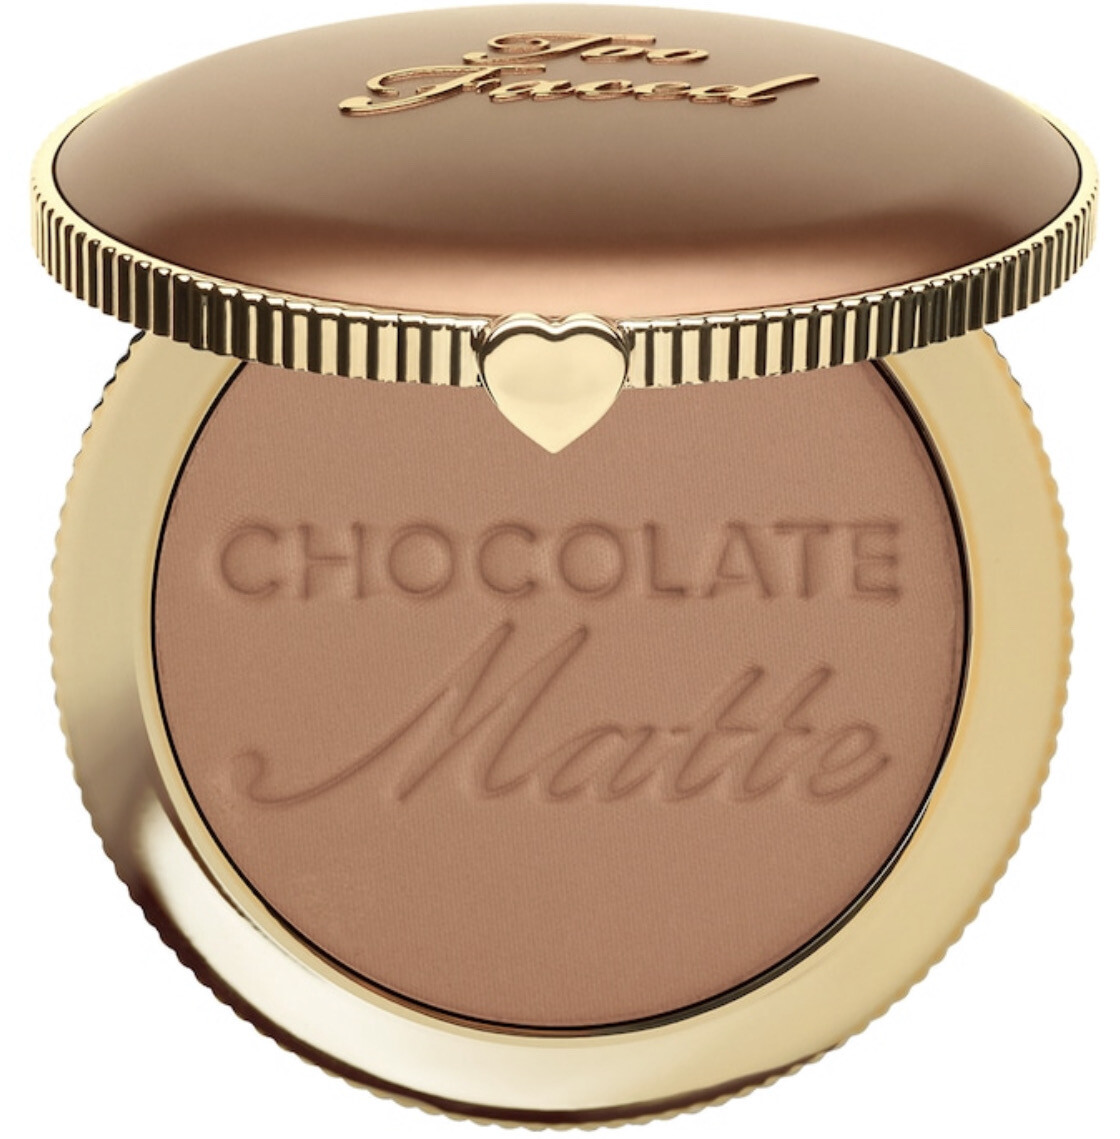 Too Faced - Chocolate Soleil Matte Bronzer | Chocolate Soleil - medium to deep